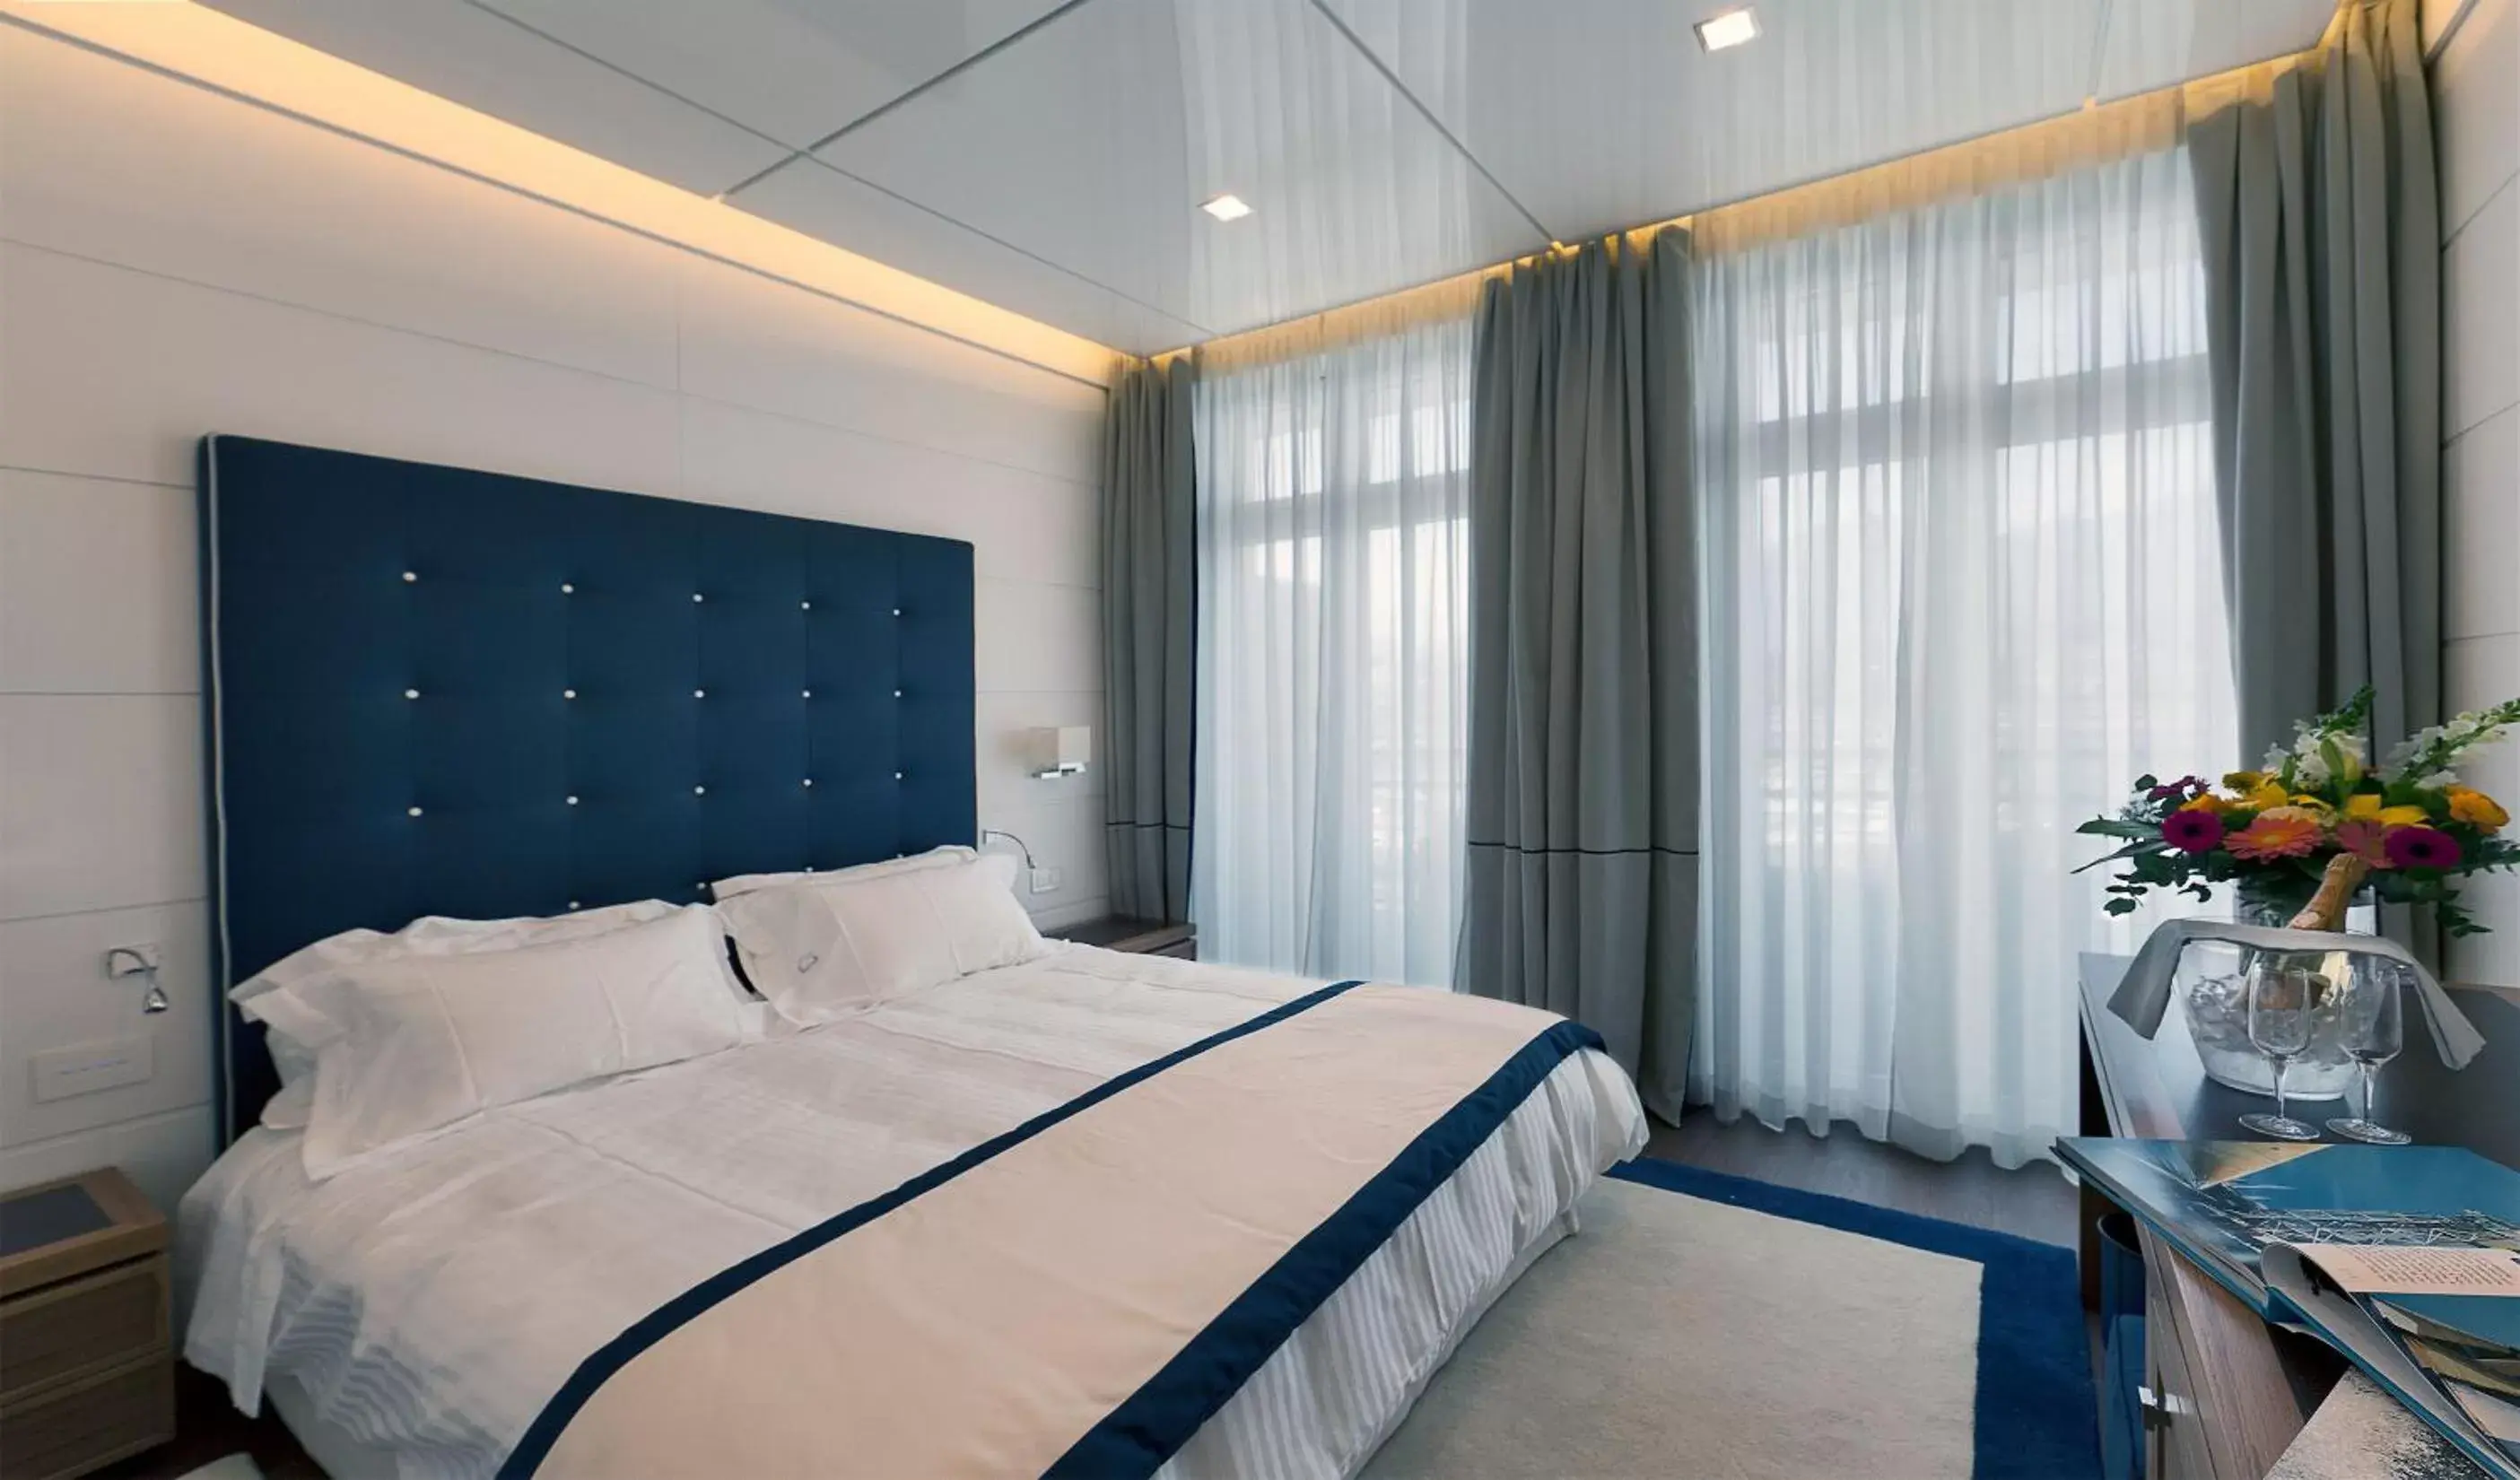 Double Room with Marina View in Yacht Club Marina Di Loano